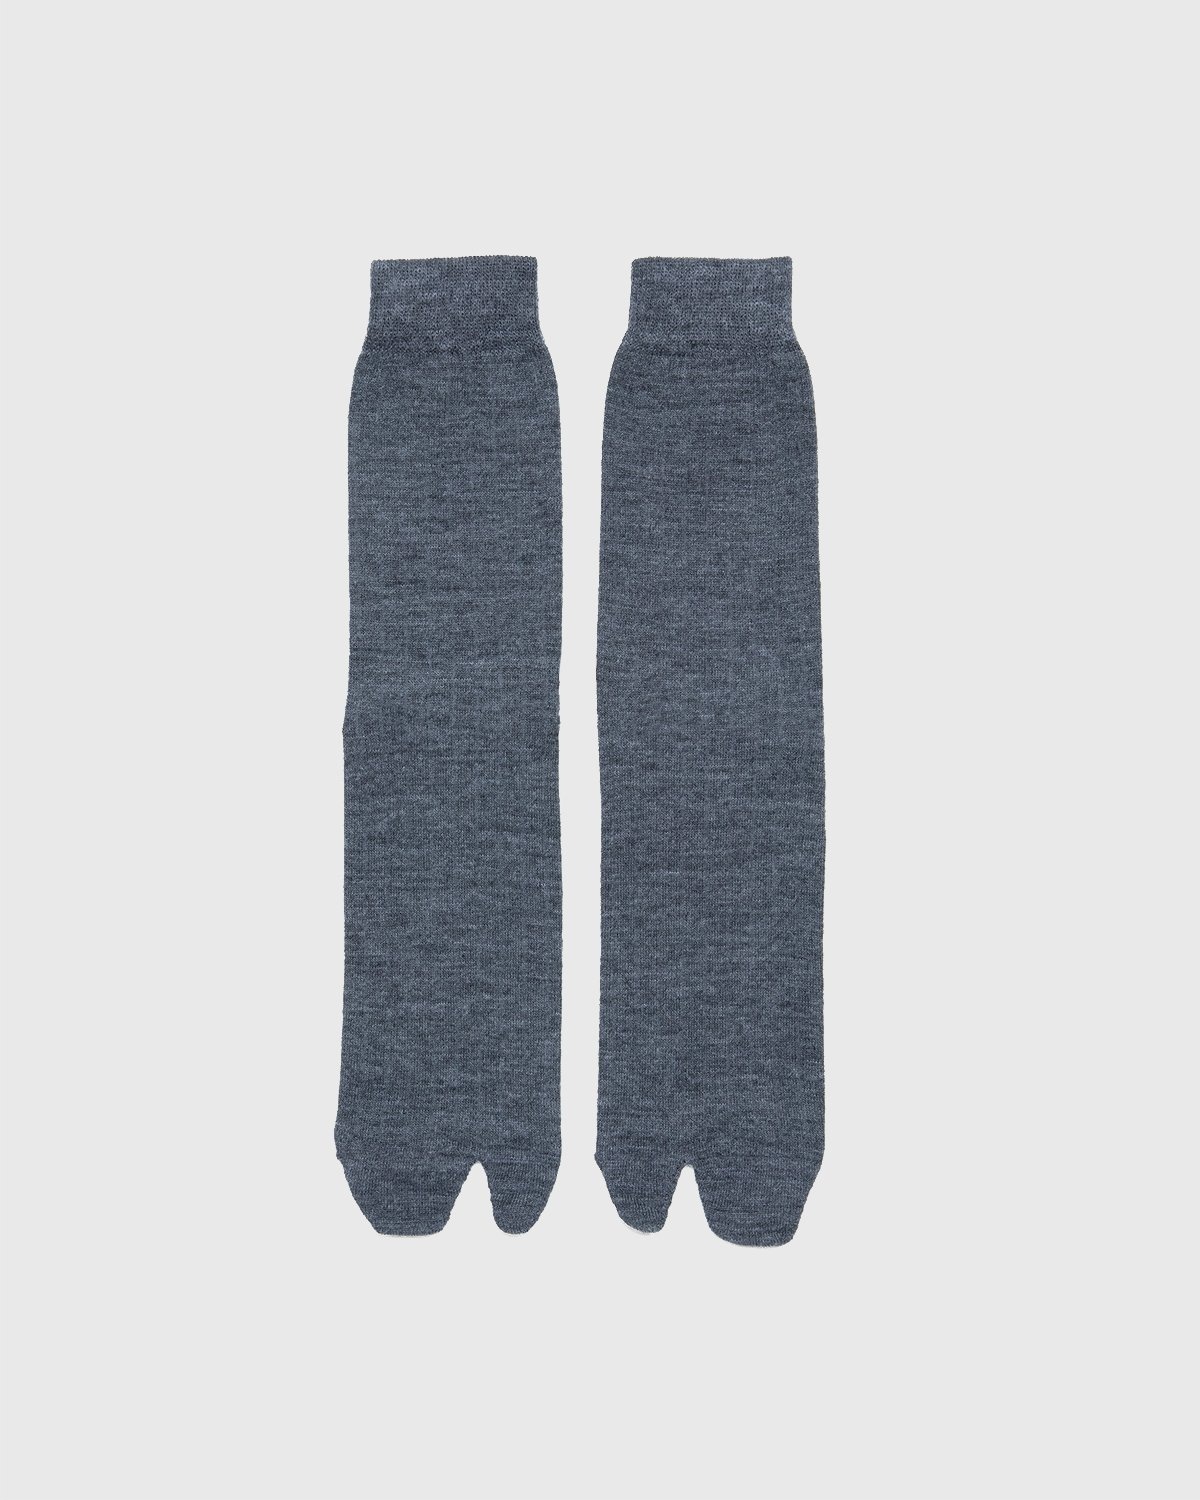 Maison Margiela – Tabi Socks Grey - Socks - Grey - Image 1